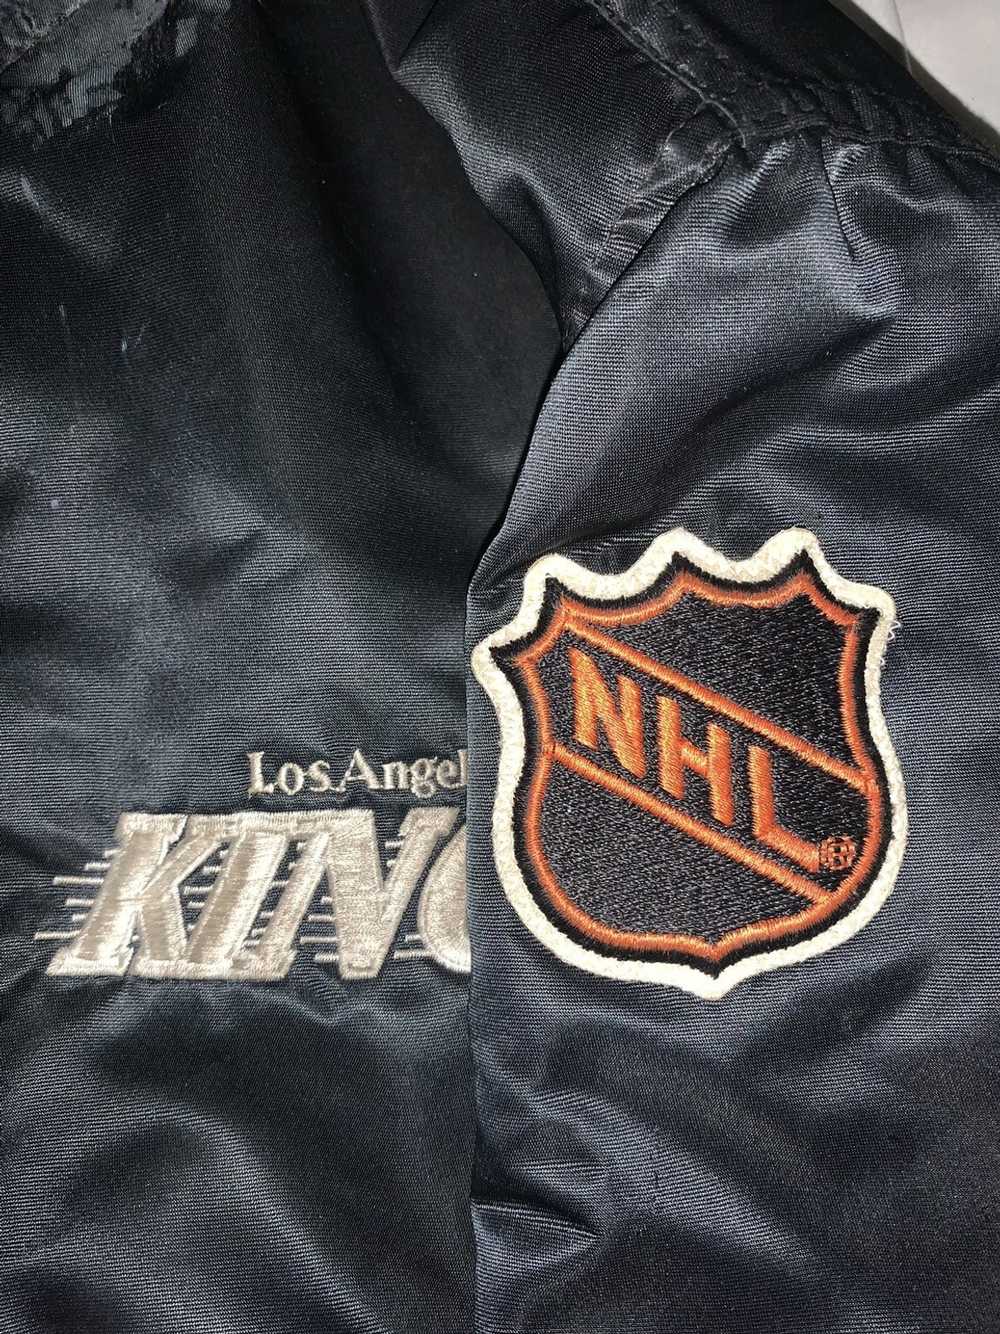 Vintage Los Angeles LA Kings Starter Satin Bomber Jacket NHL